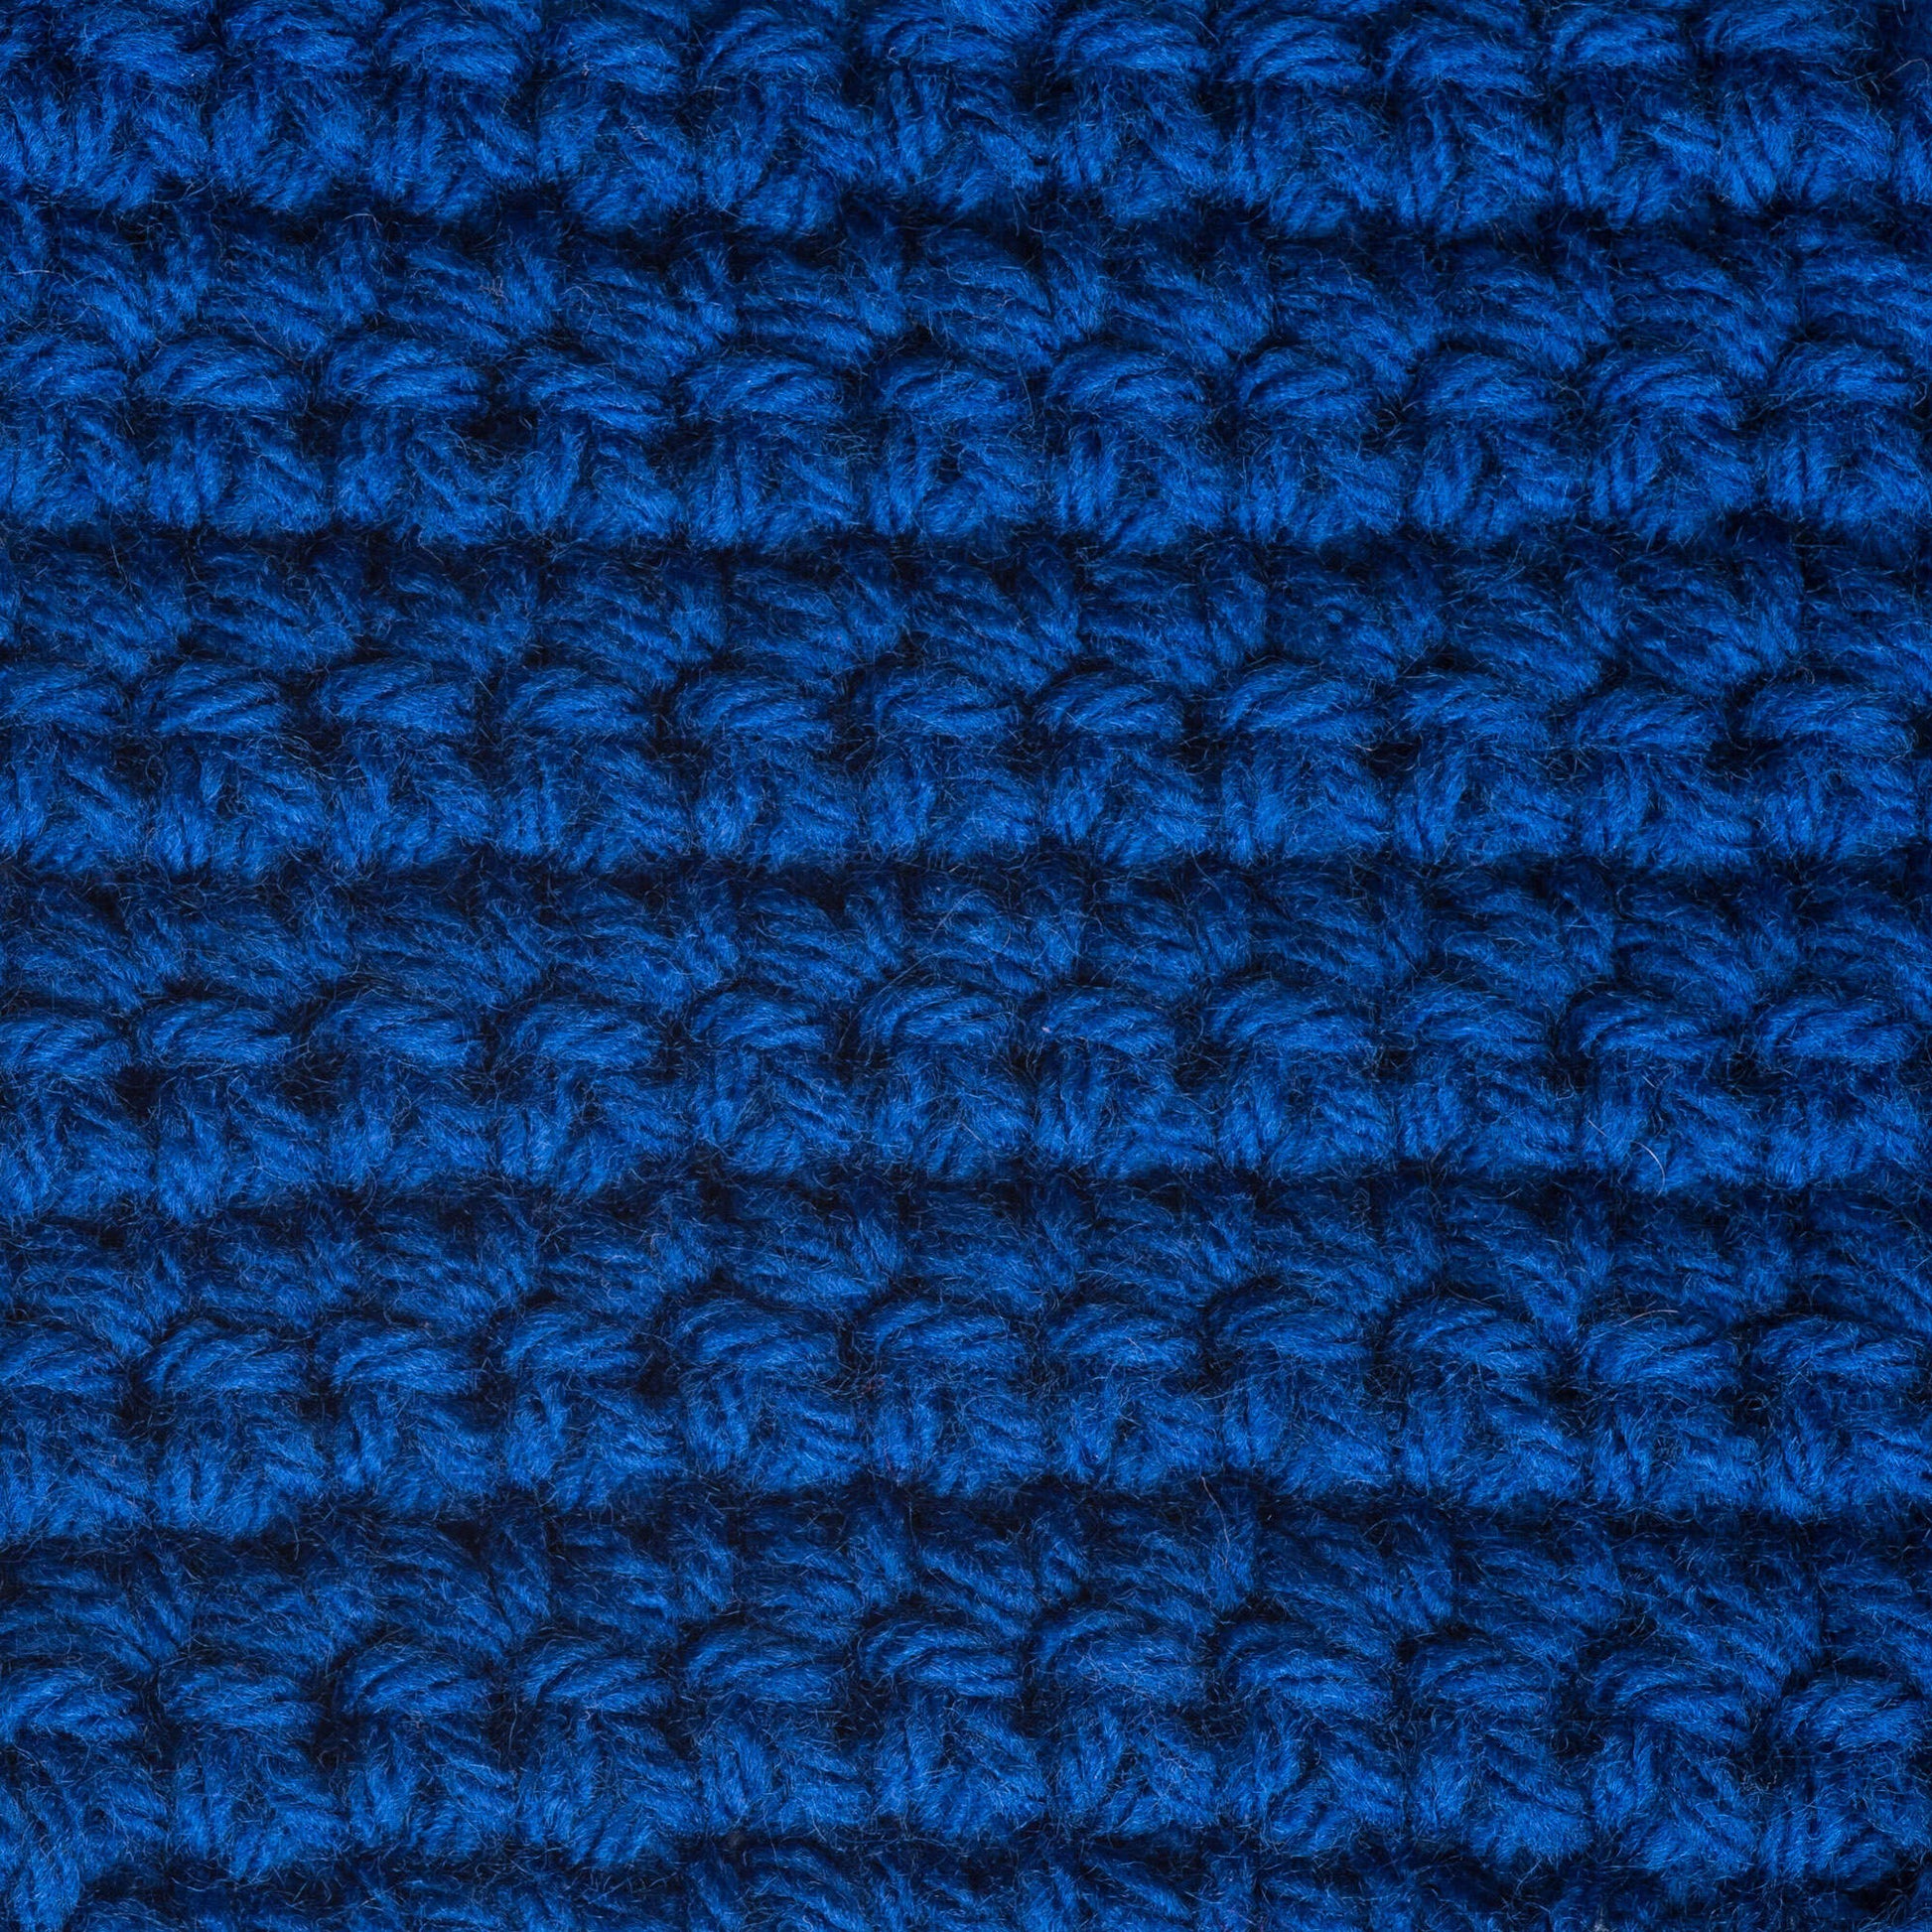 Phentex Worsted Yarn Royal Blue